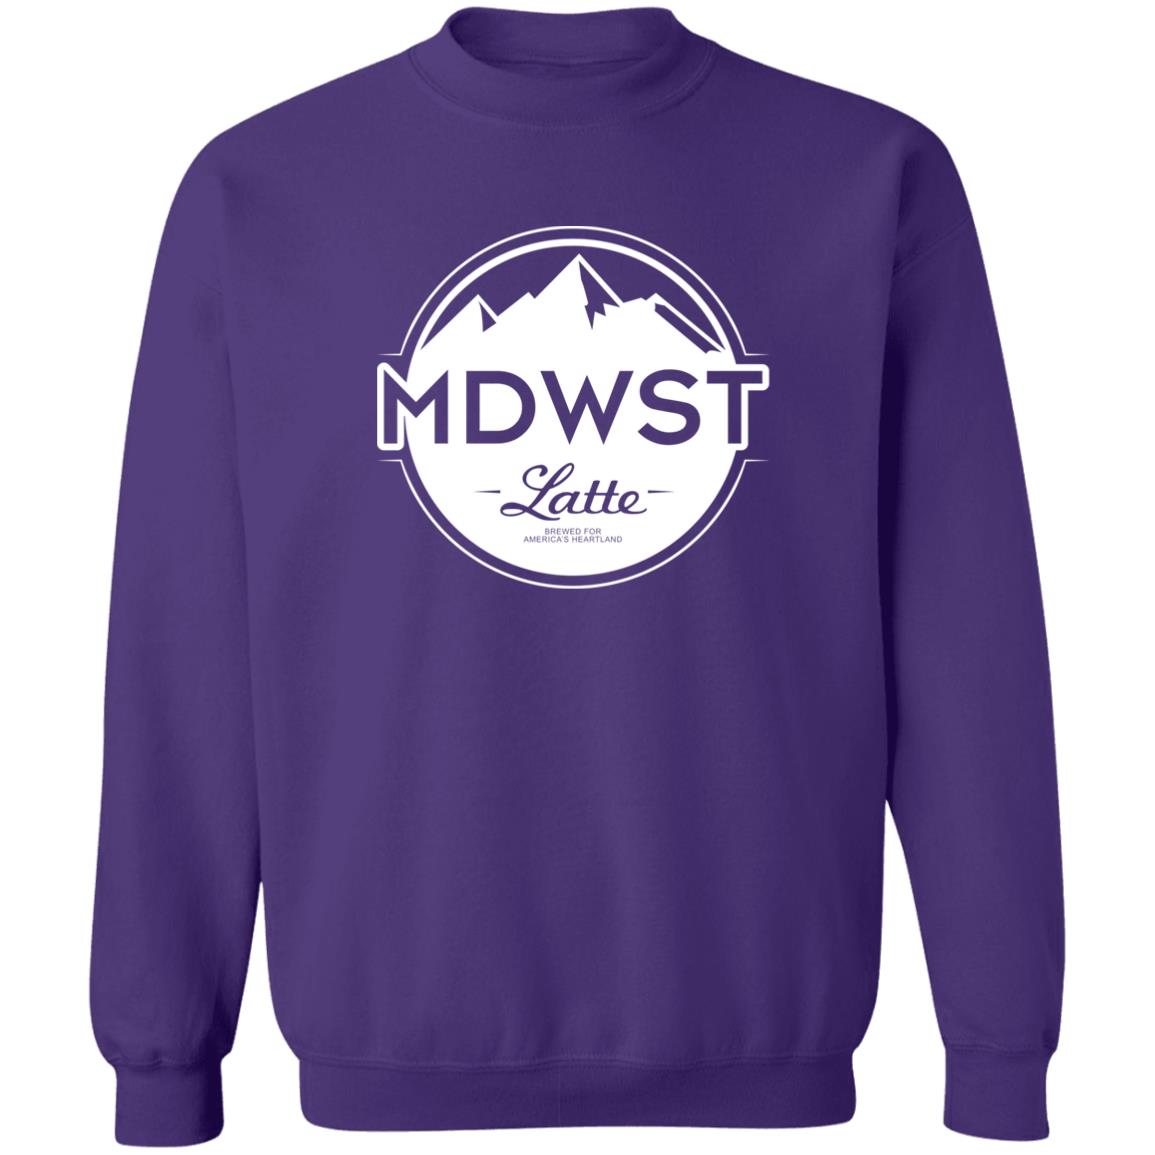 MDWST Latte Crewneck Pullover Sweatshirt